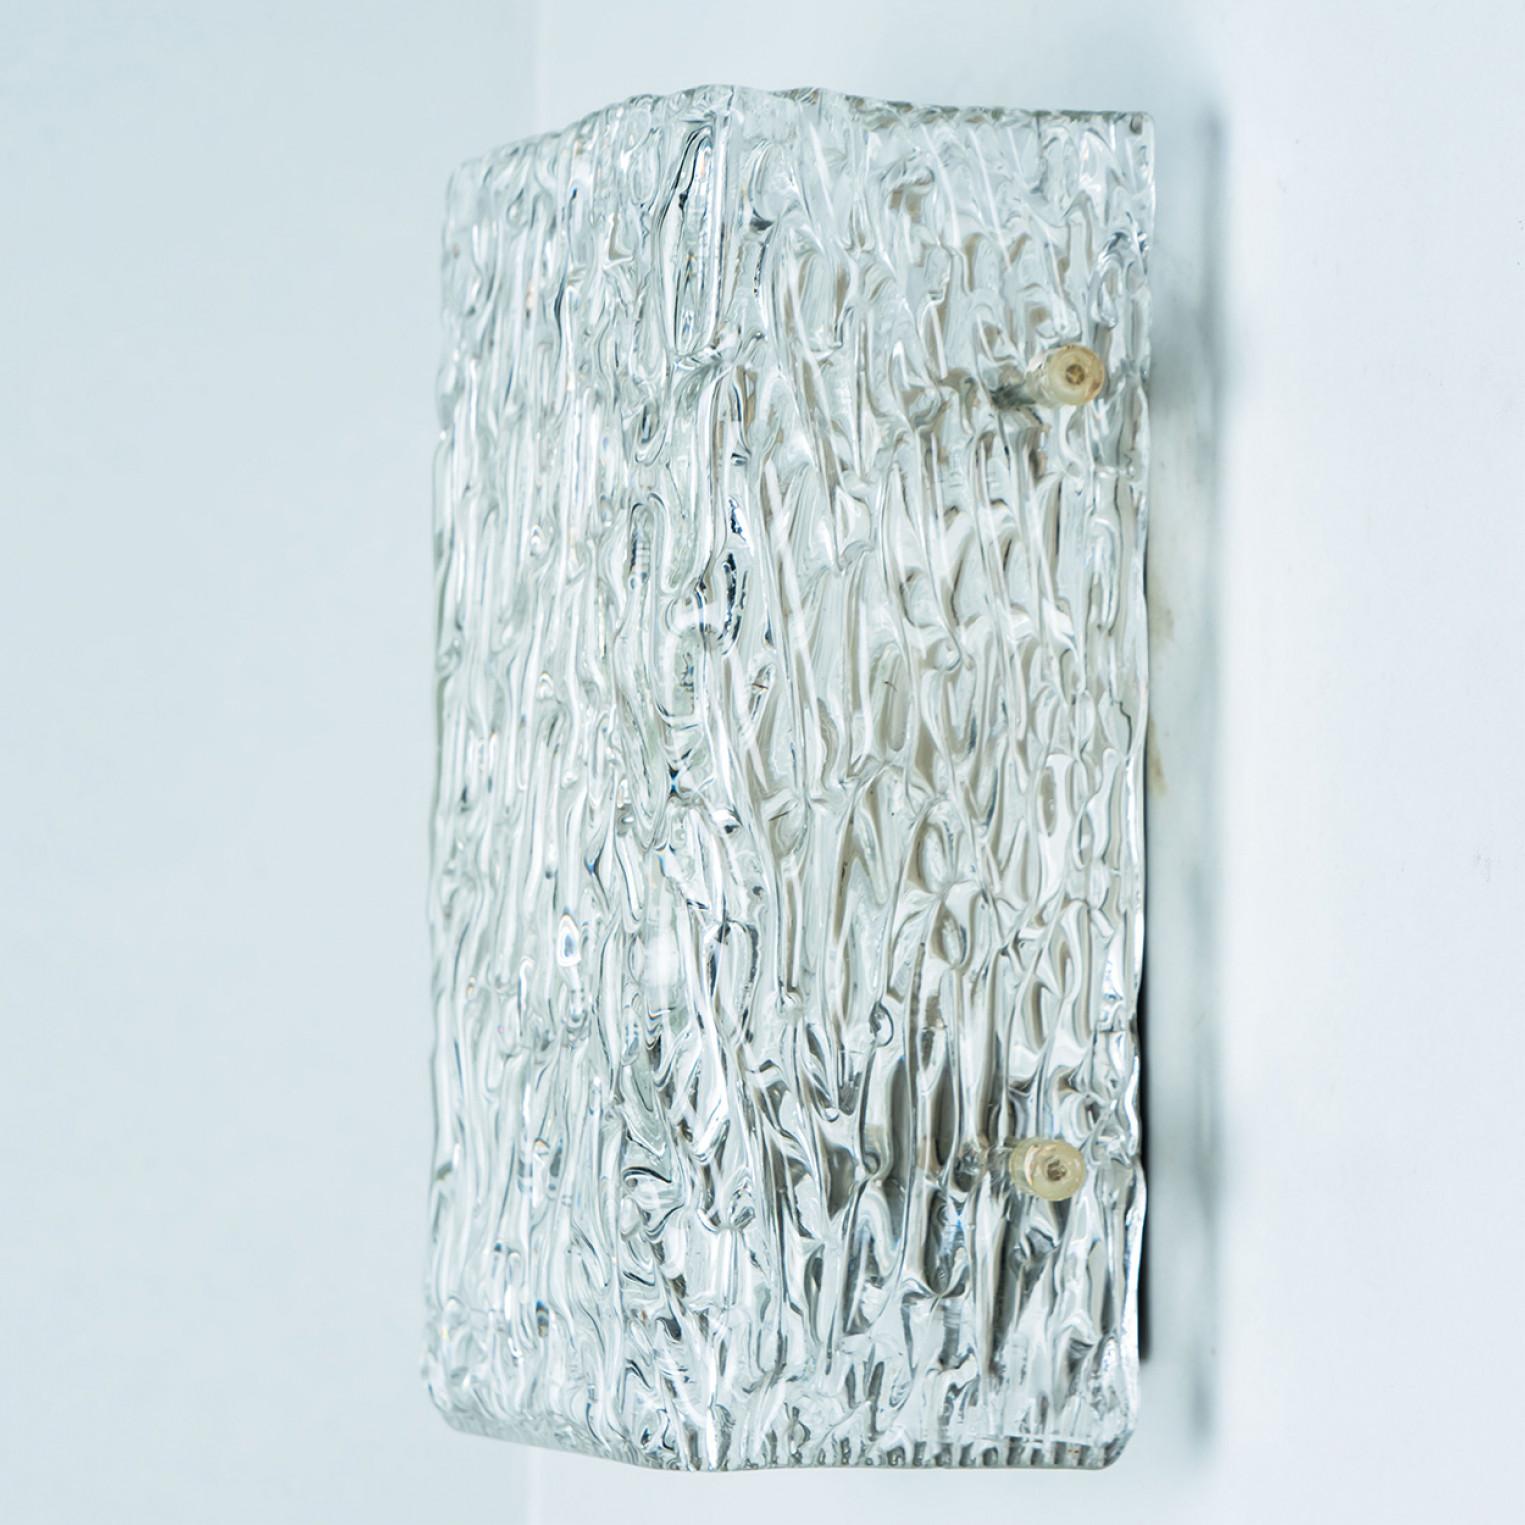 1 of 4 Textured Wave Glass Wall Lights by Kalmar Leuchten, 1970s For Sale 3